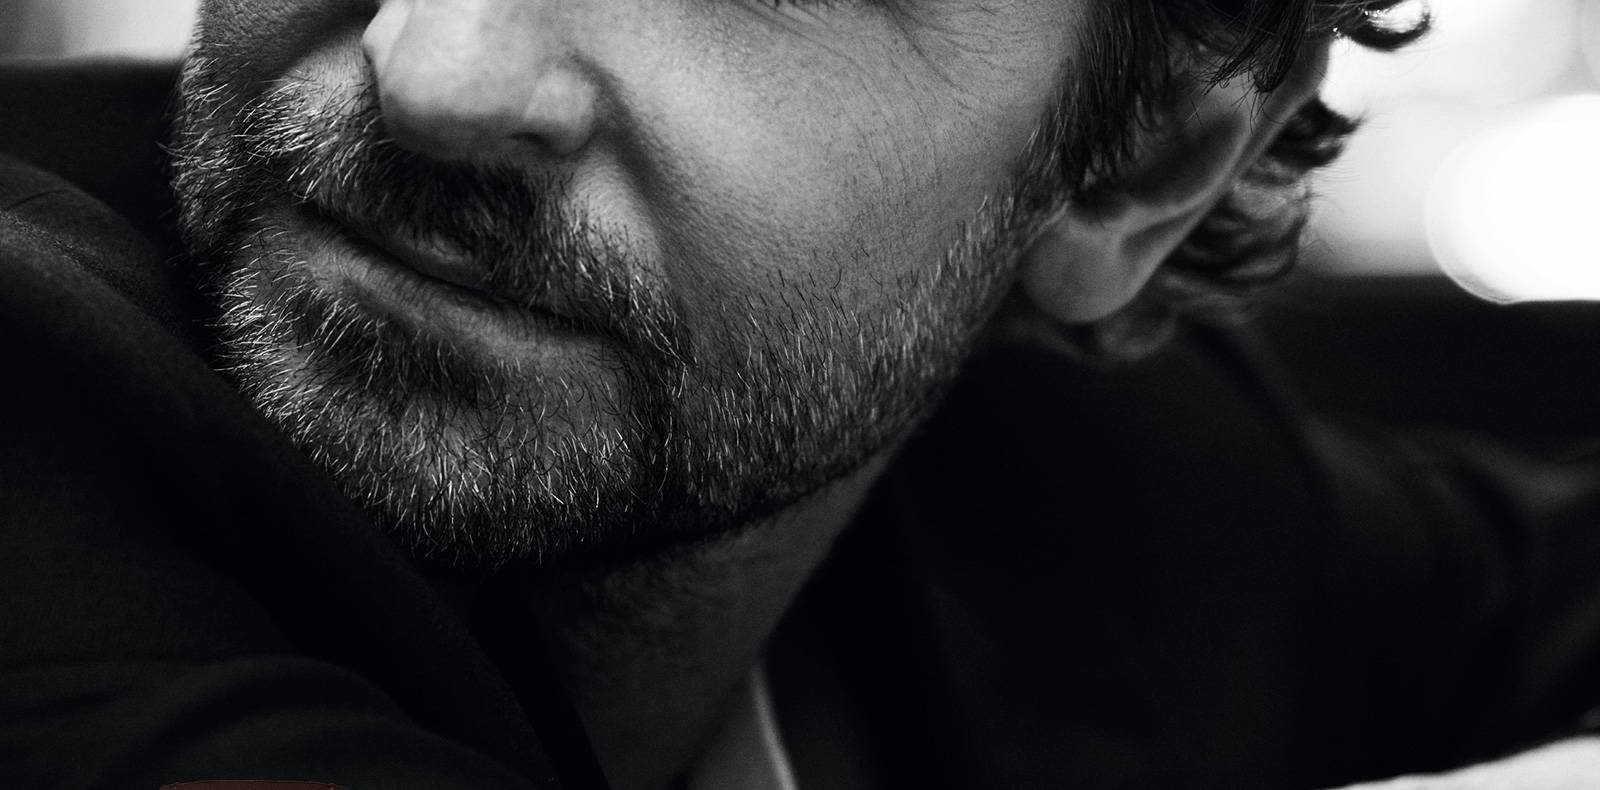 Bradley Cooper stars in Louis Vuitton campaign